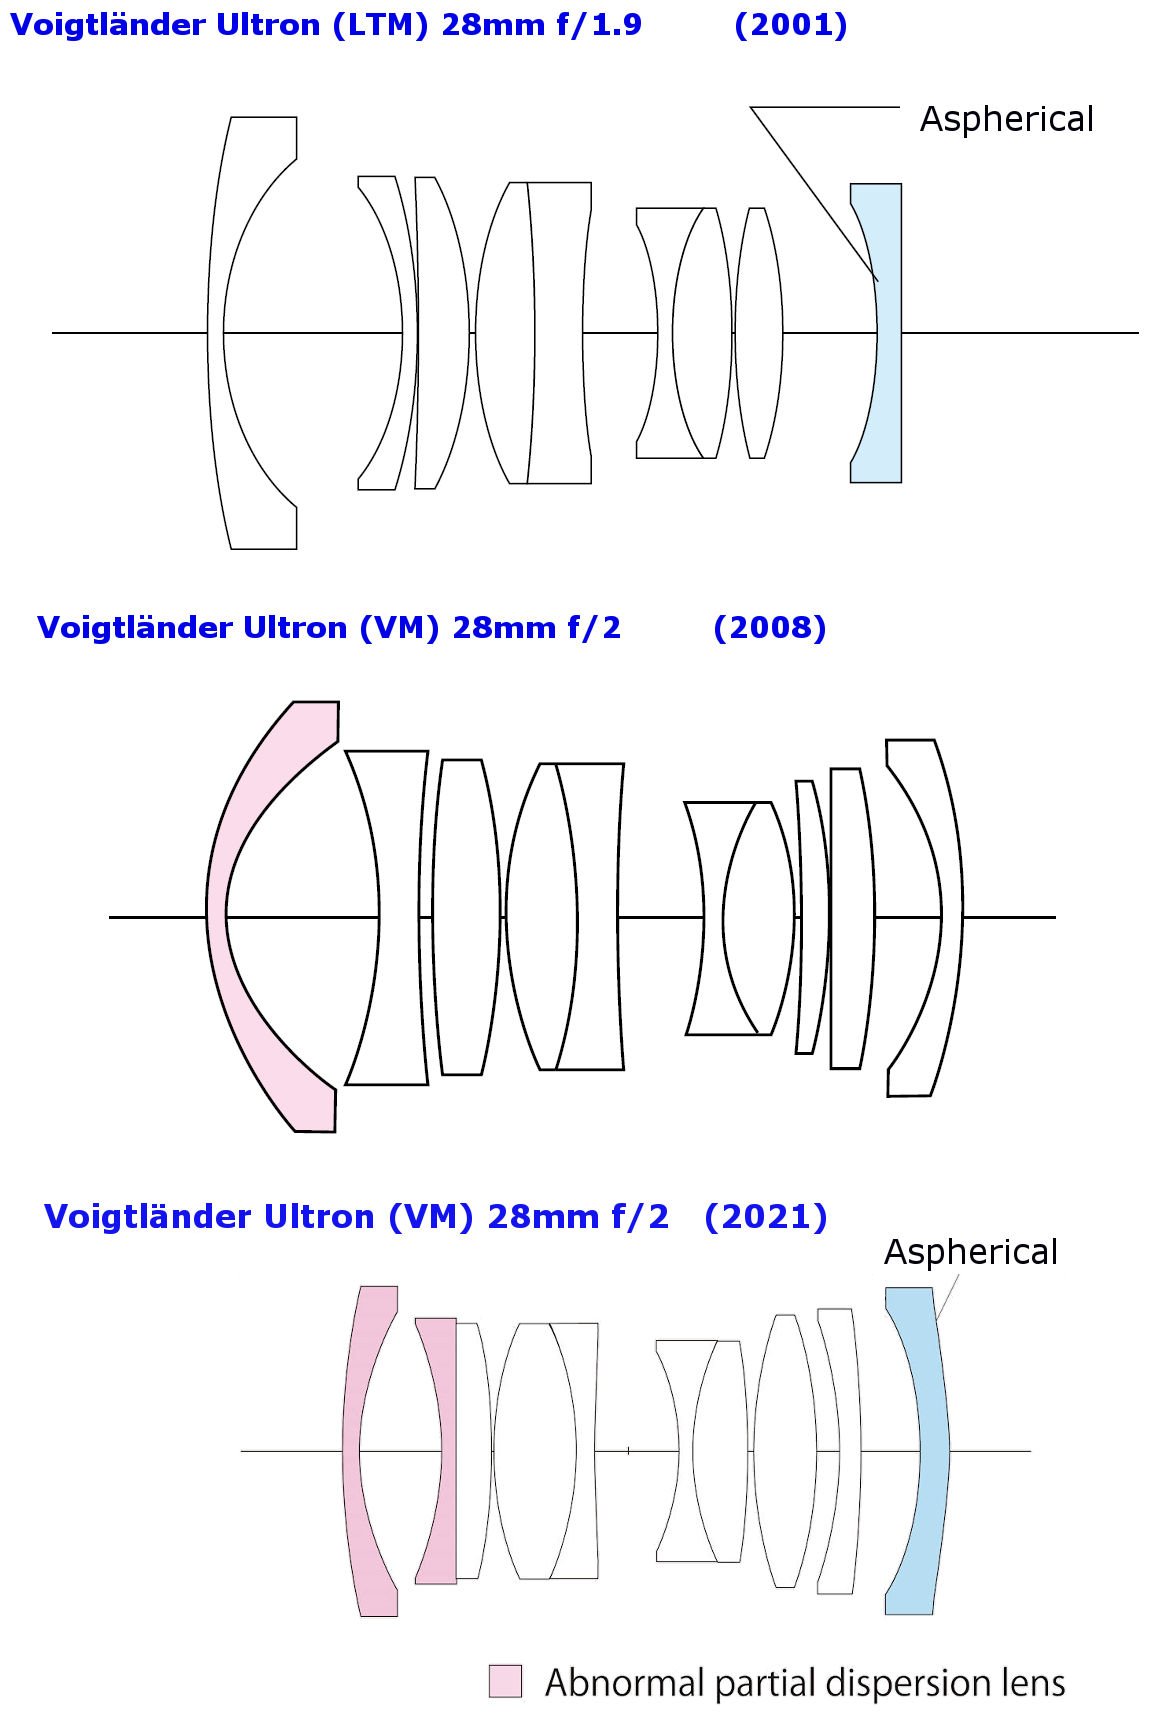 Evolution of optical design
        Ultron 28mm Voigtländer